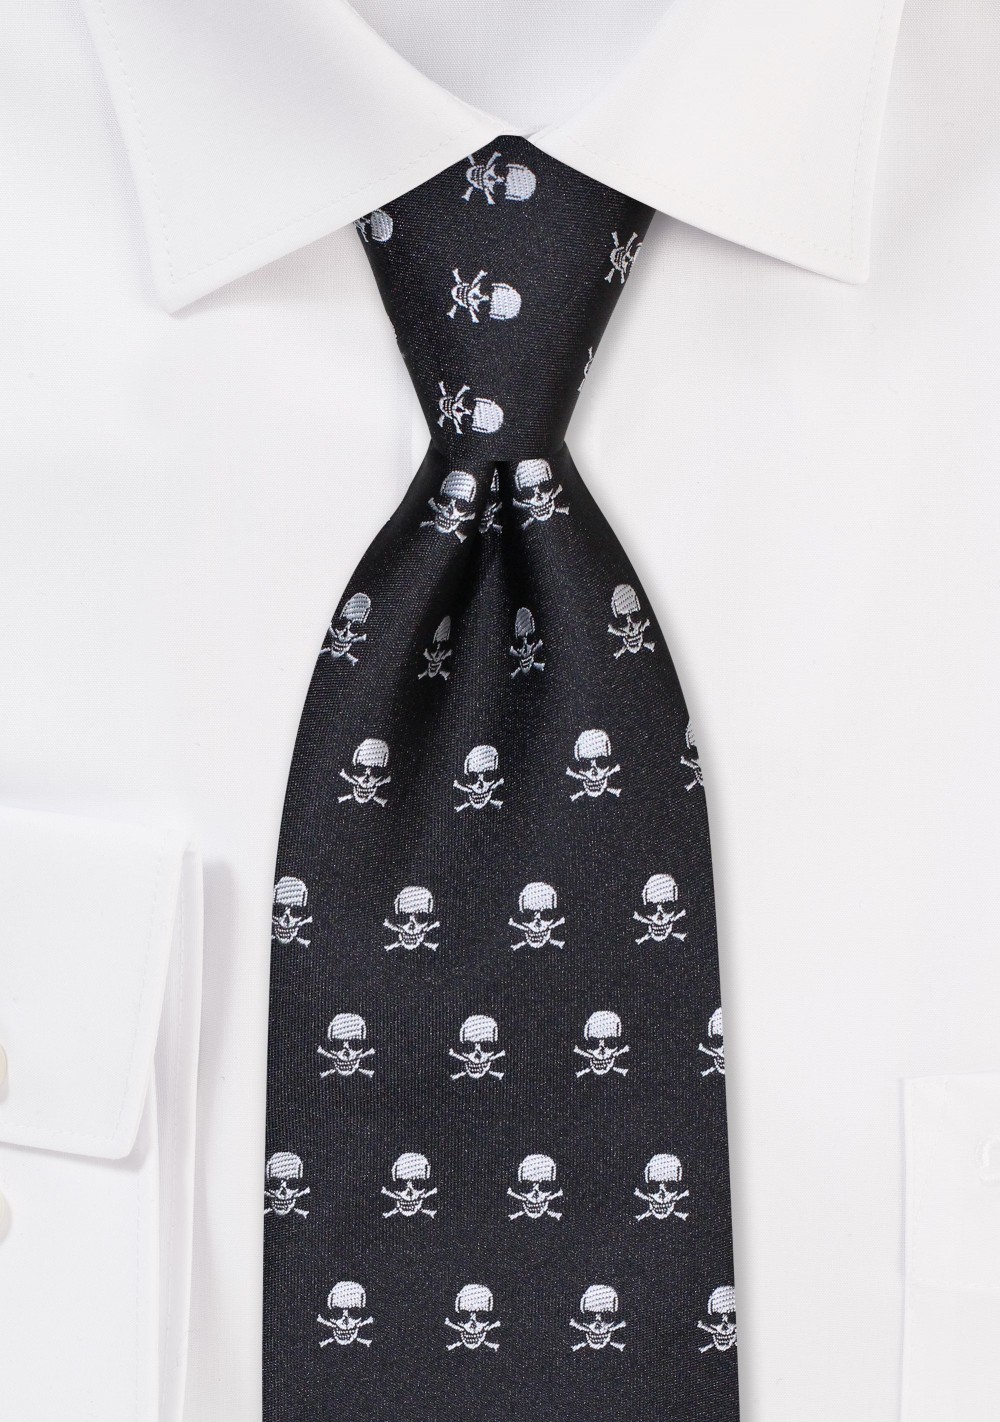 Skull and Crossbones Tie in Black